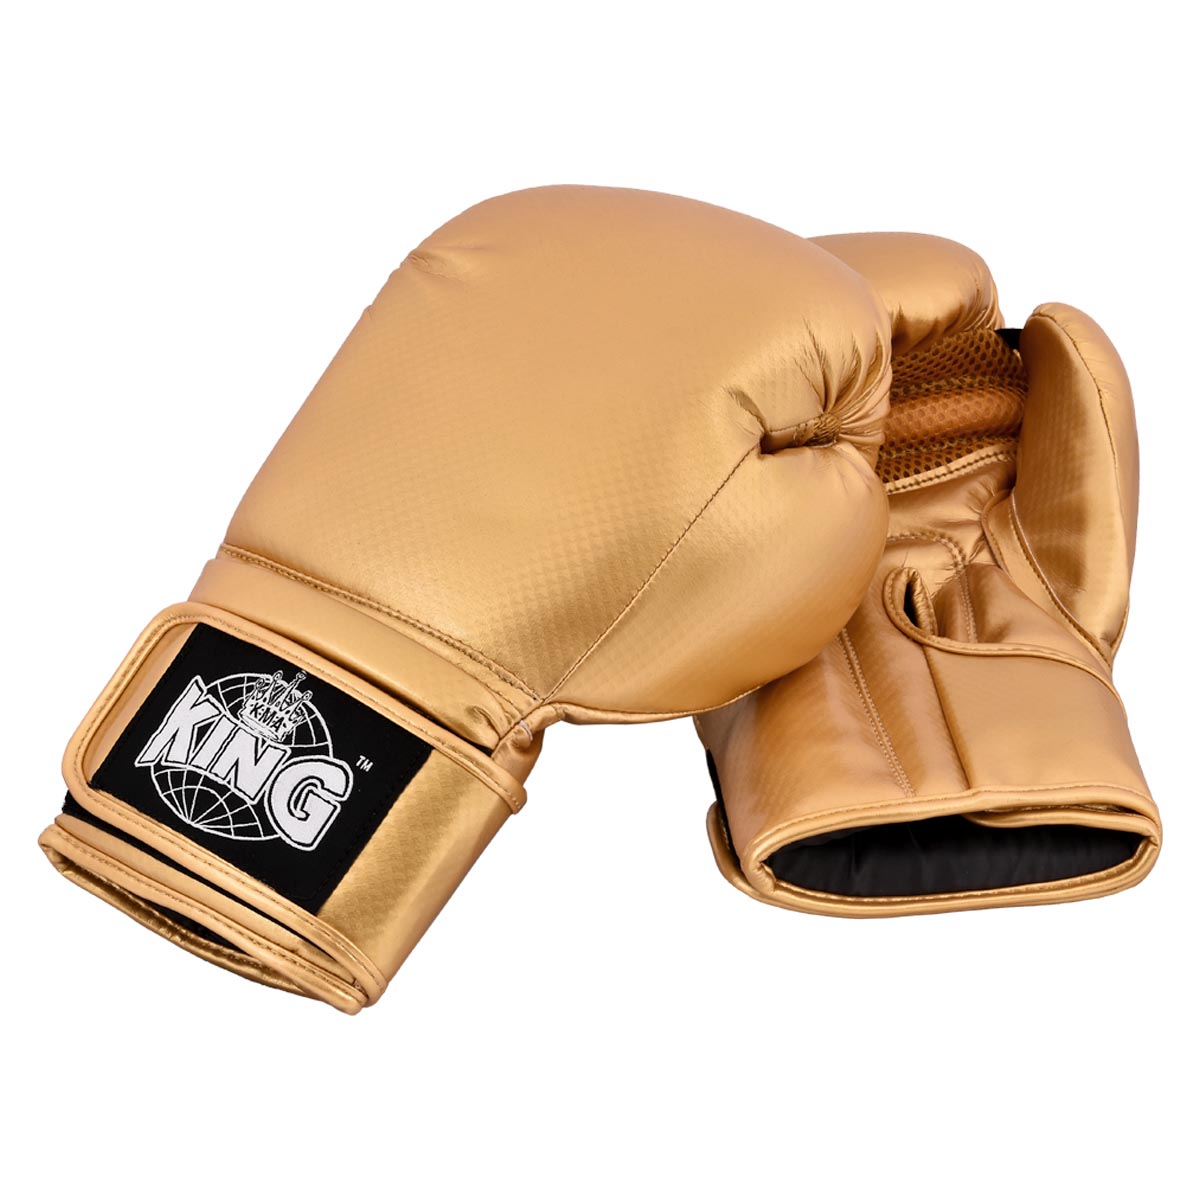 Details about   Gloves Uniform Leg Protector Professional Guard Men Fight Boxing MMA Equipment 